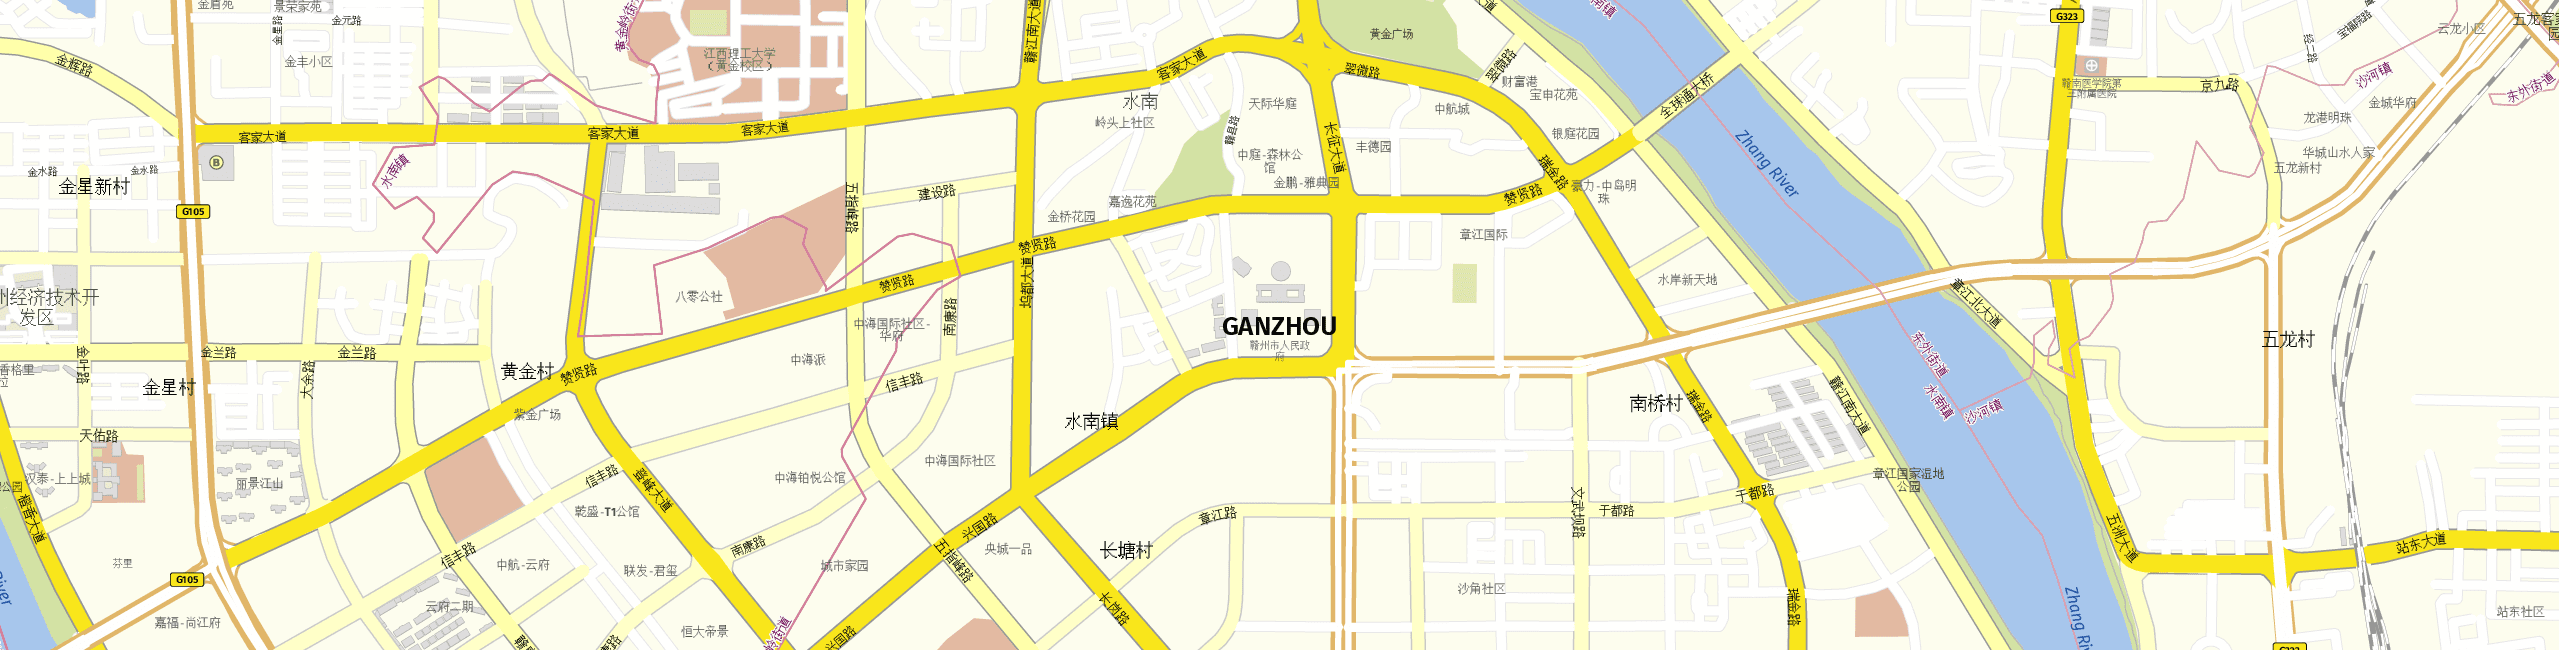 Stadtplan Ganzhou zum Downloaden.